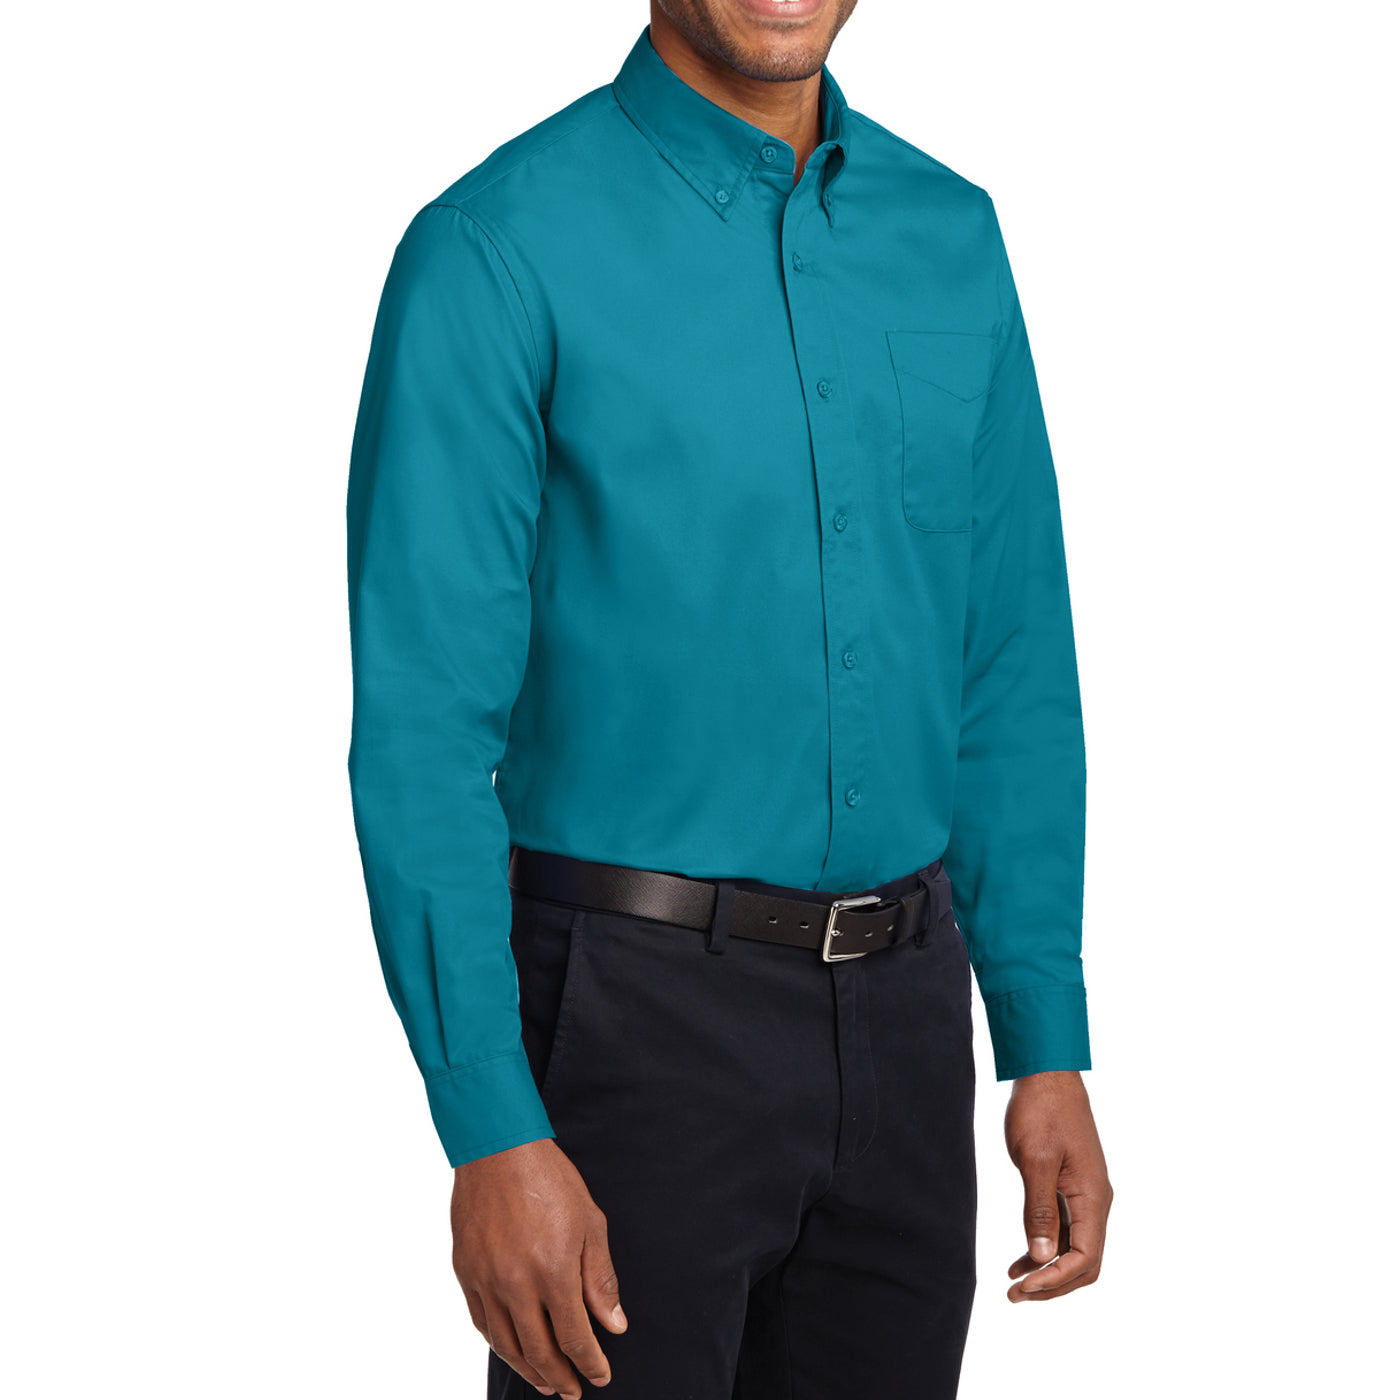 Men's Long Sleeve Easy Care Shirt - Teal Green - Side